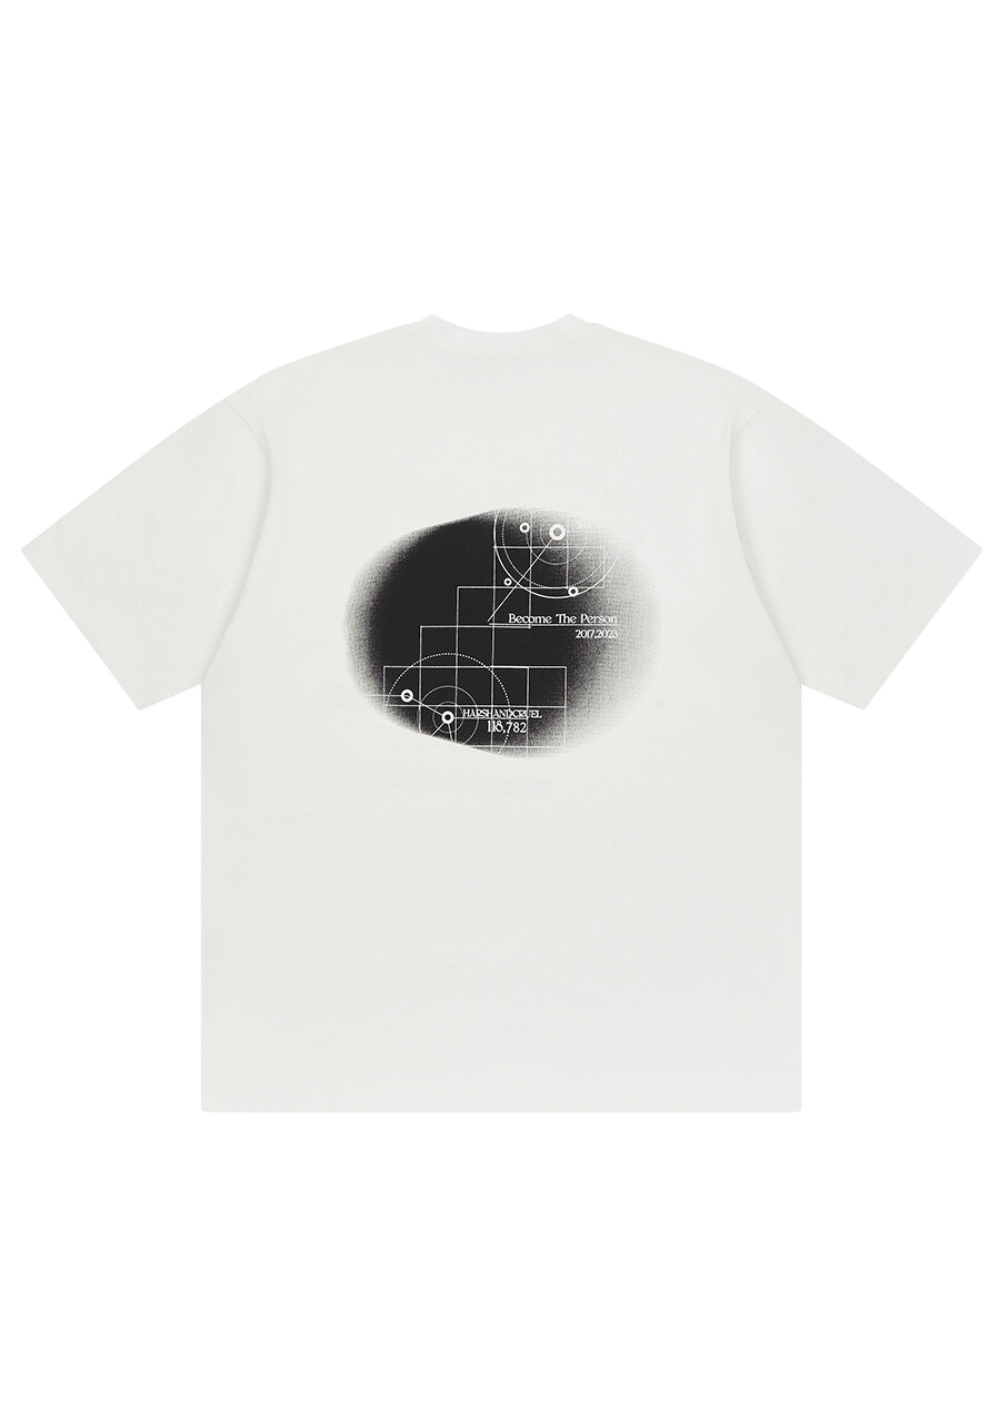 Geometric Gradient Print T-Shirt - PSYLOS 1, Geometric Gradient Print T-Shirt, T-Shirt, HARSH AND CRUEL, PSYLOS 1